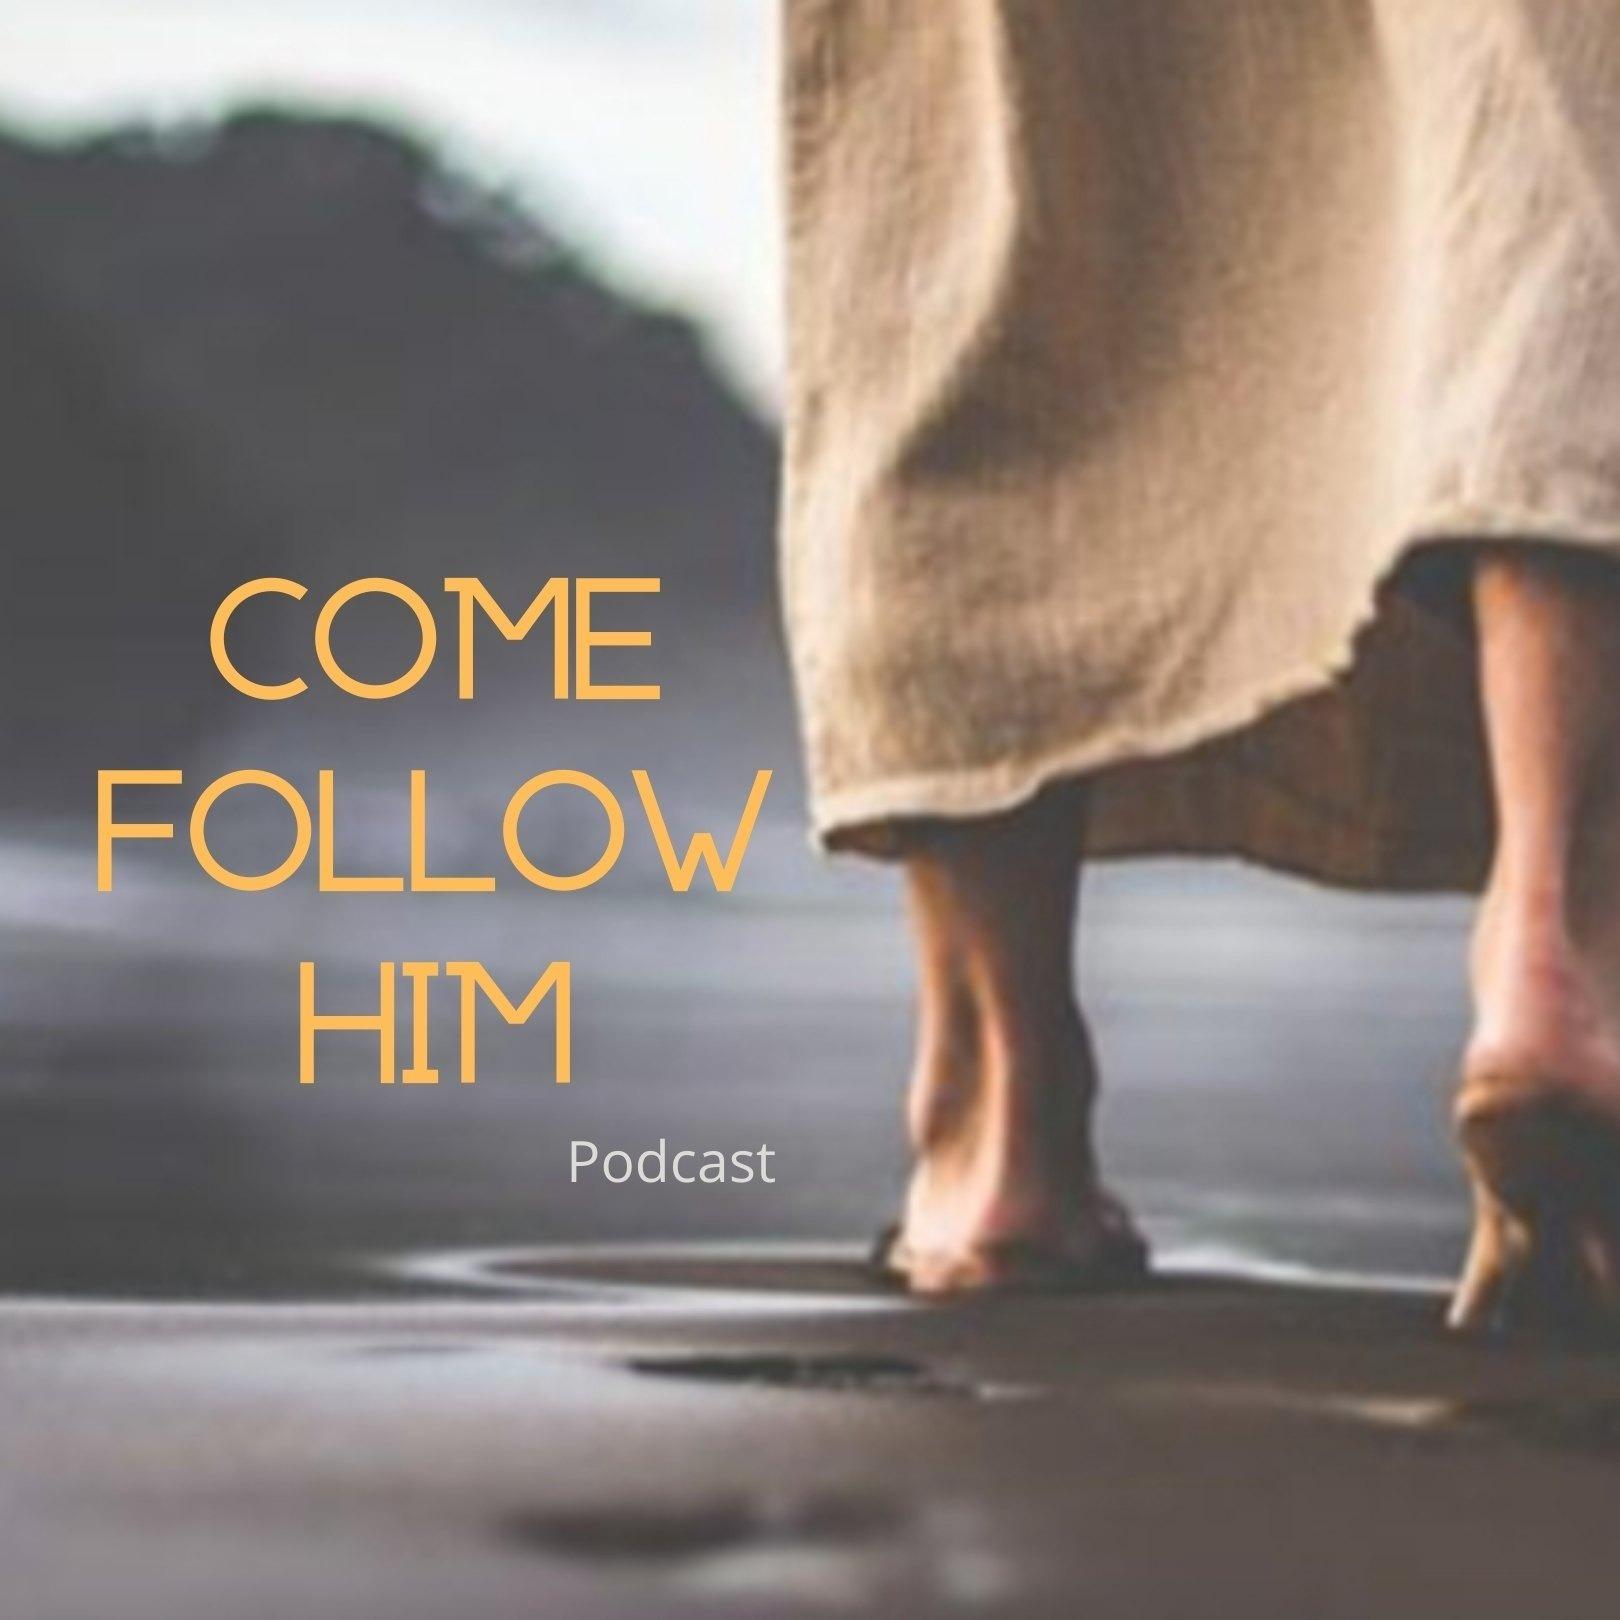 Come, Follow Him